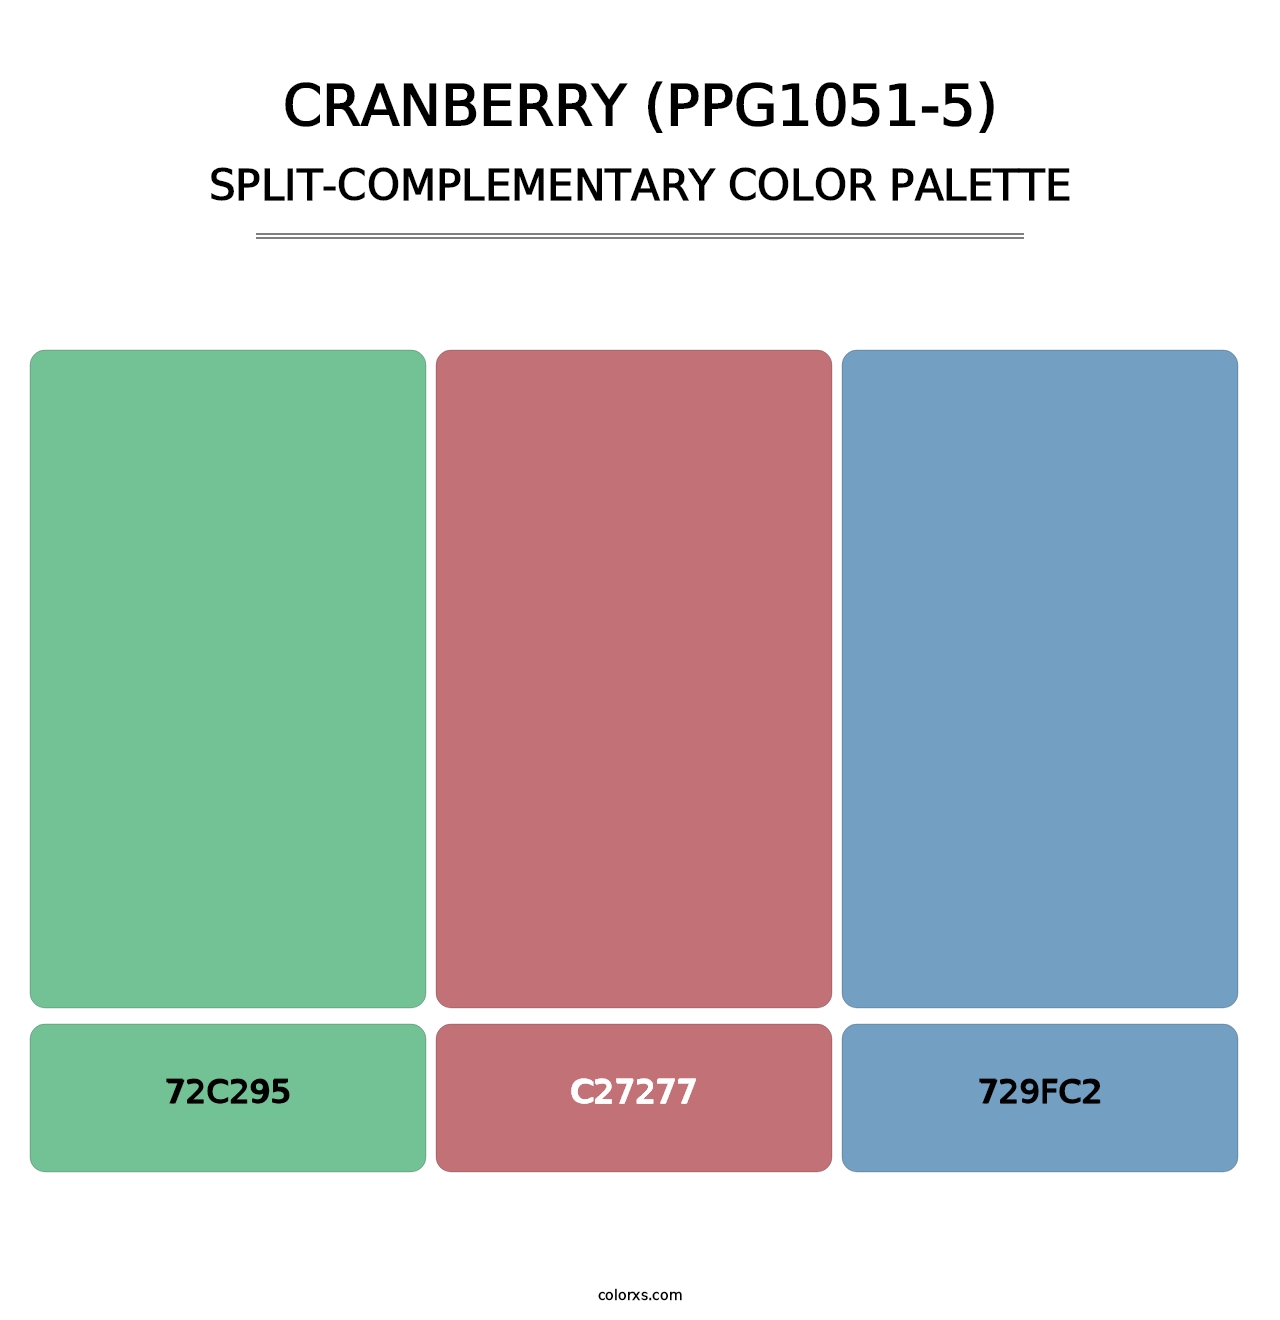 Cranberry (PPG1051-5) - Split-Complementary Color Palette